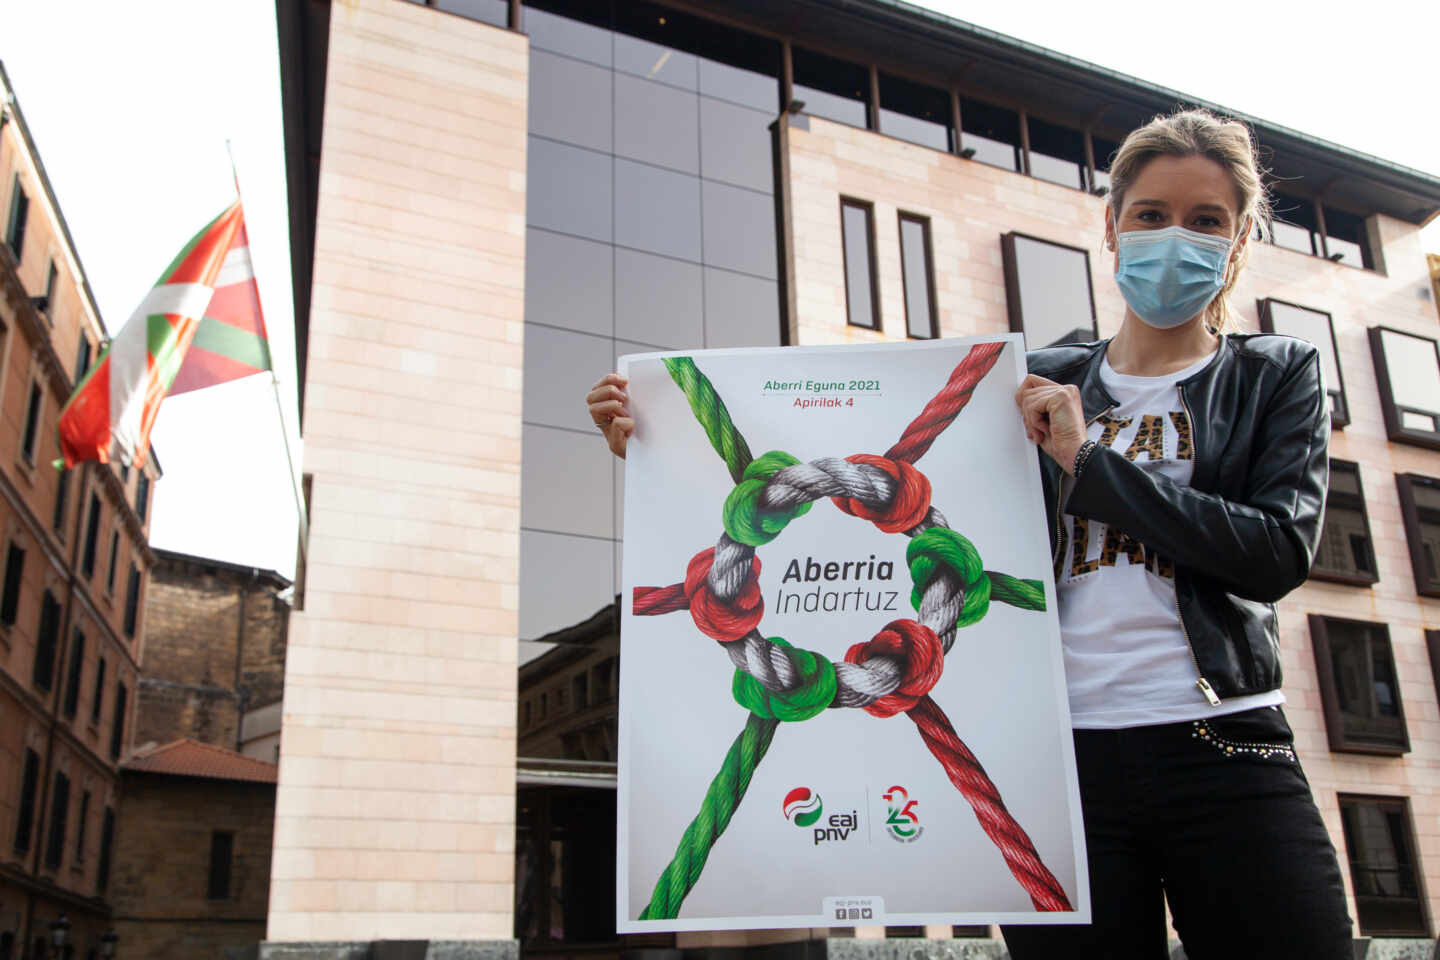 El PNV reivindica la "patria vasca" como antídoto ante crisis como la pandemia